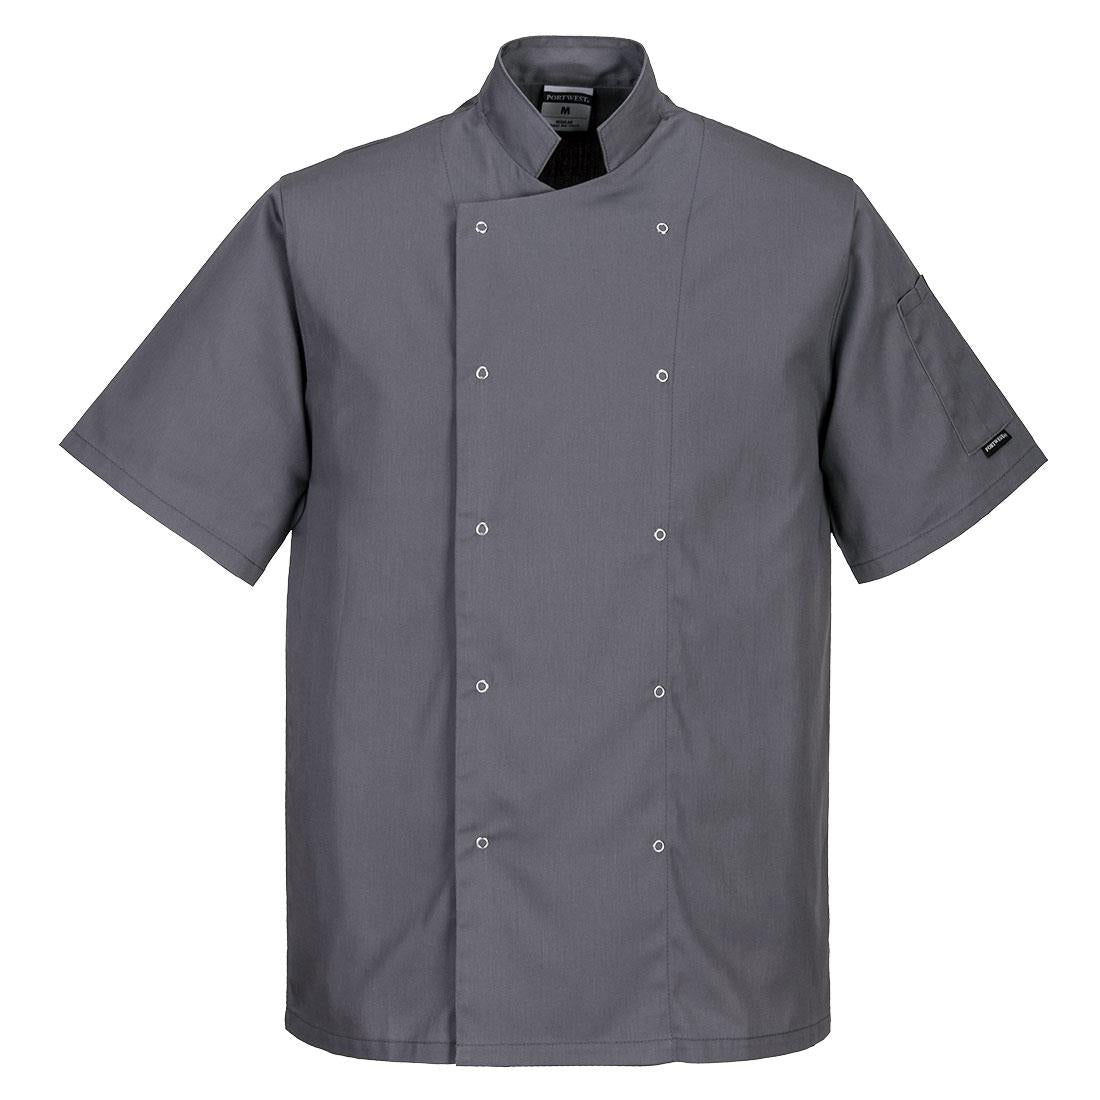 Portwest Cumbria grey short sleeve work catering food kitchen chefs jacket #C733